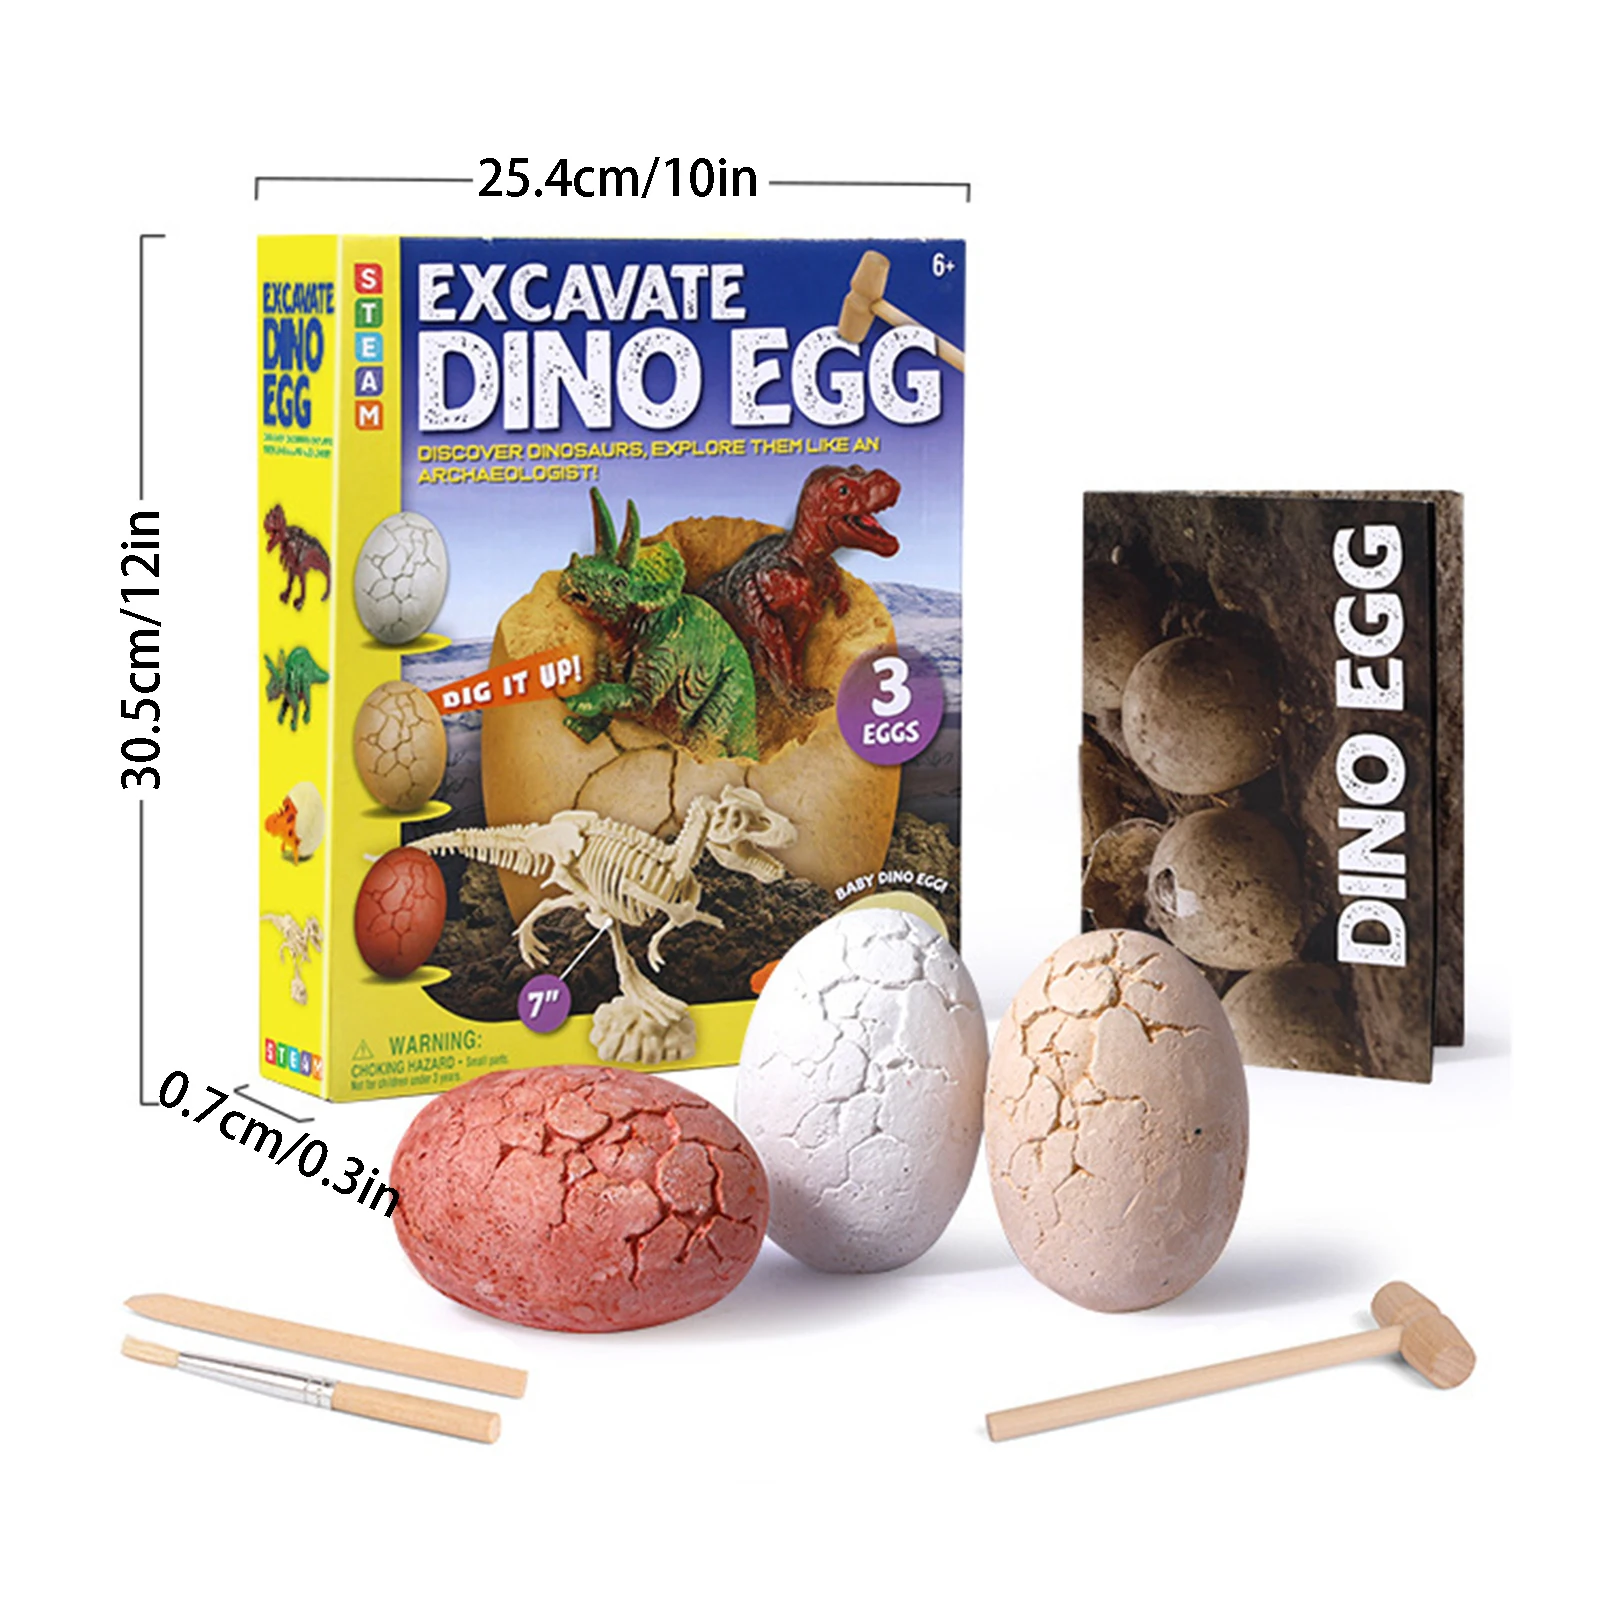 Dino Eggs Dig Kit Dinosaur Eggs Excavation Toy Kit Dinosaur Toys Dinosaur Eggs Excavation Toy Educational Science Dinosaur Toys images - 6